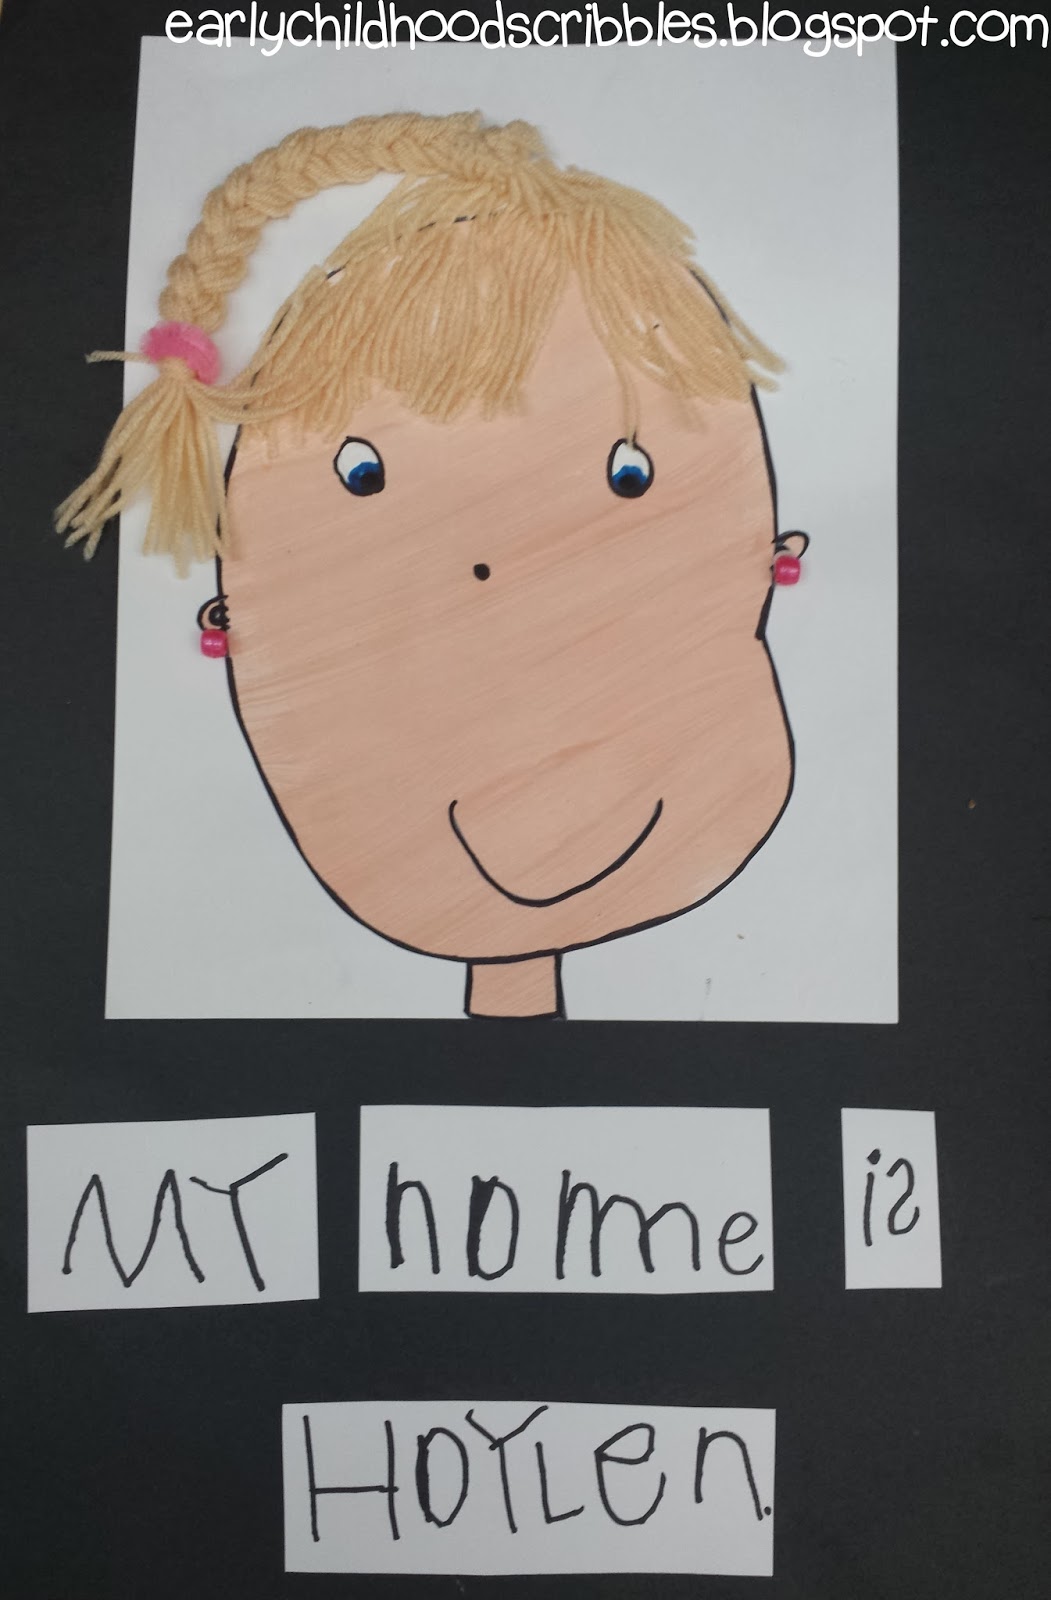 early-childhood-scribbles-preschool-self-portraits